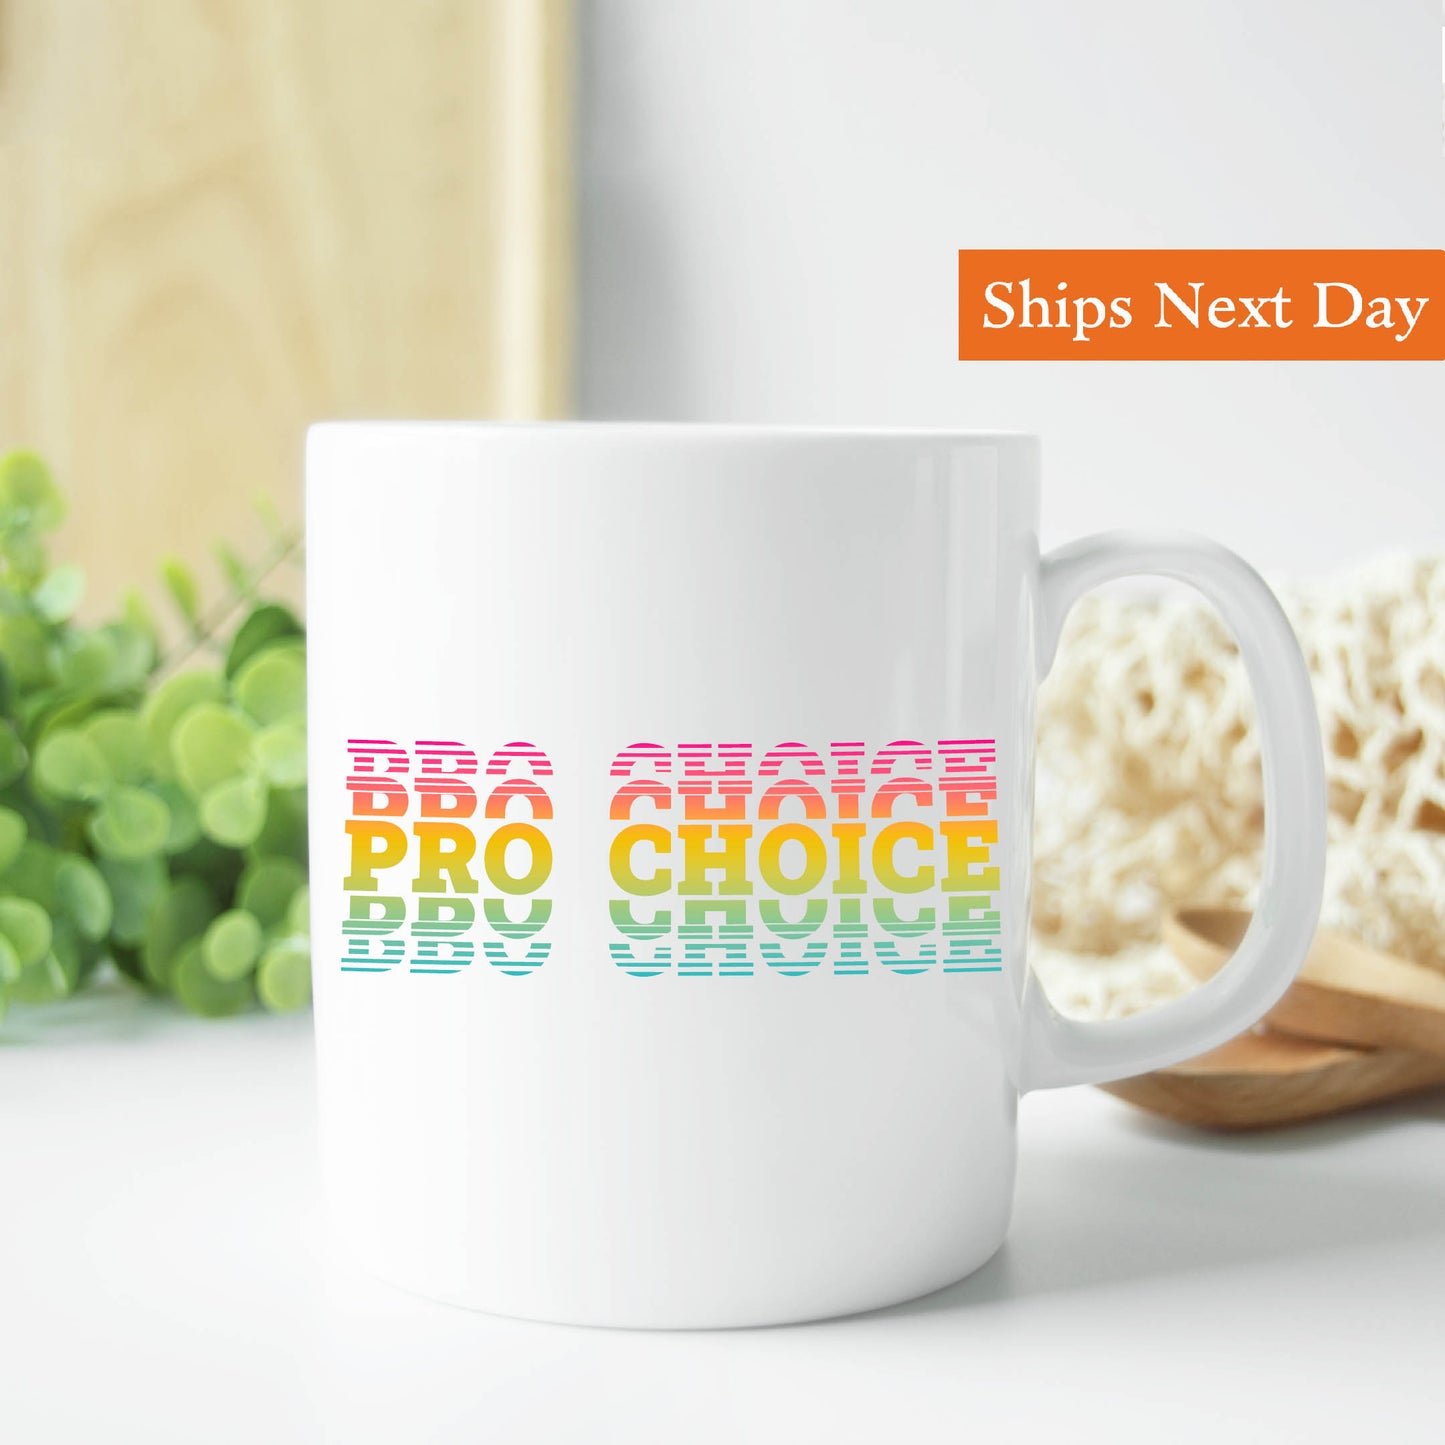 Pro choice Rainbow Mug 11 oz.